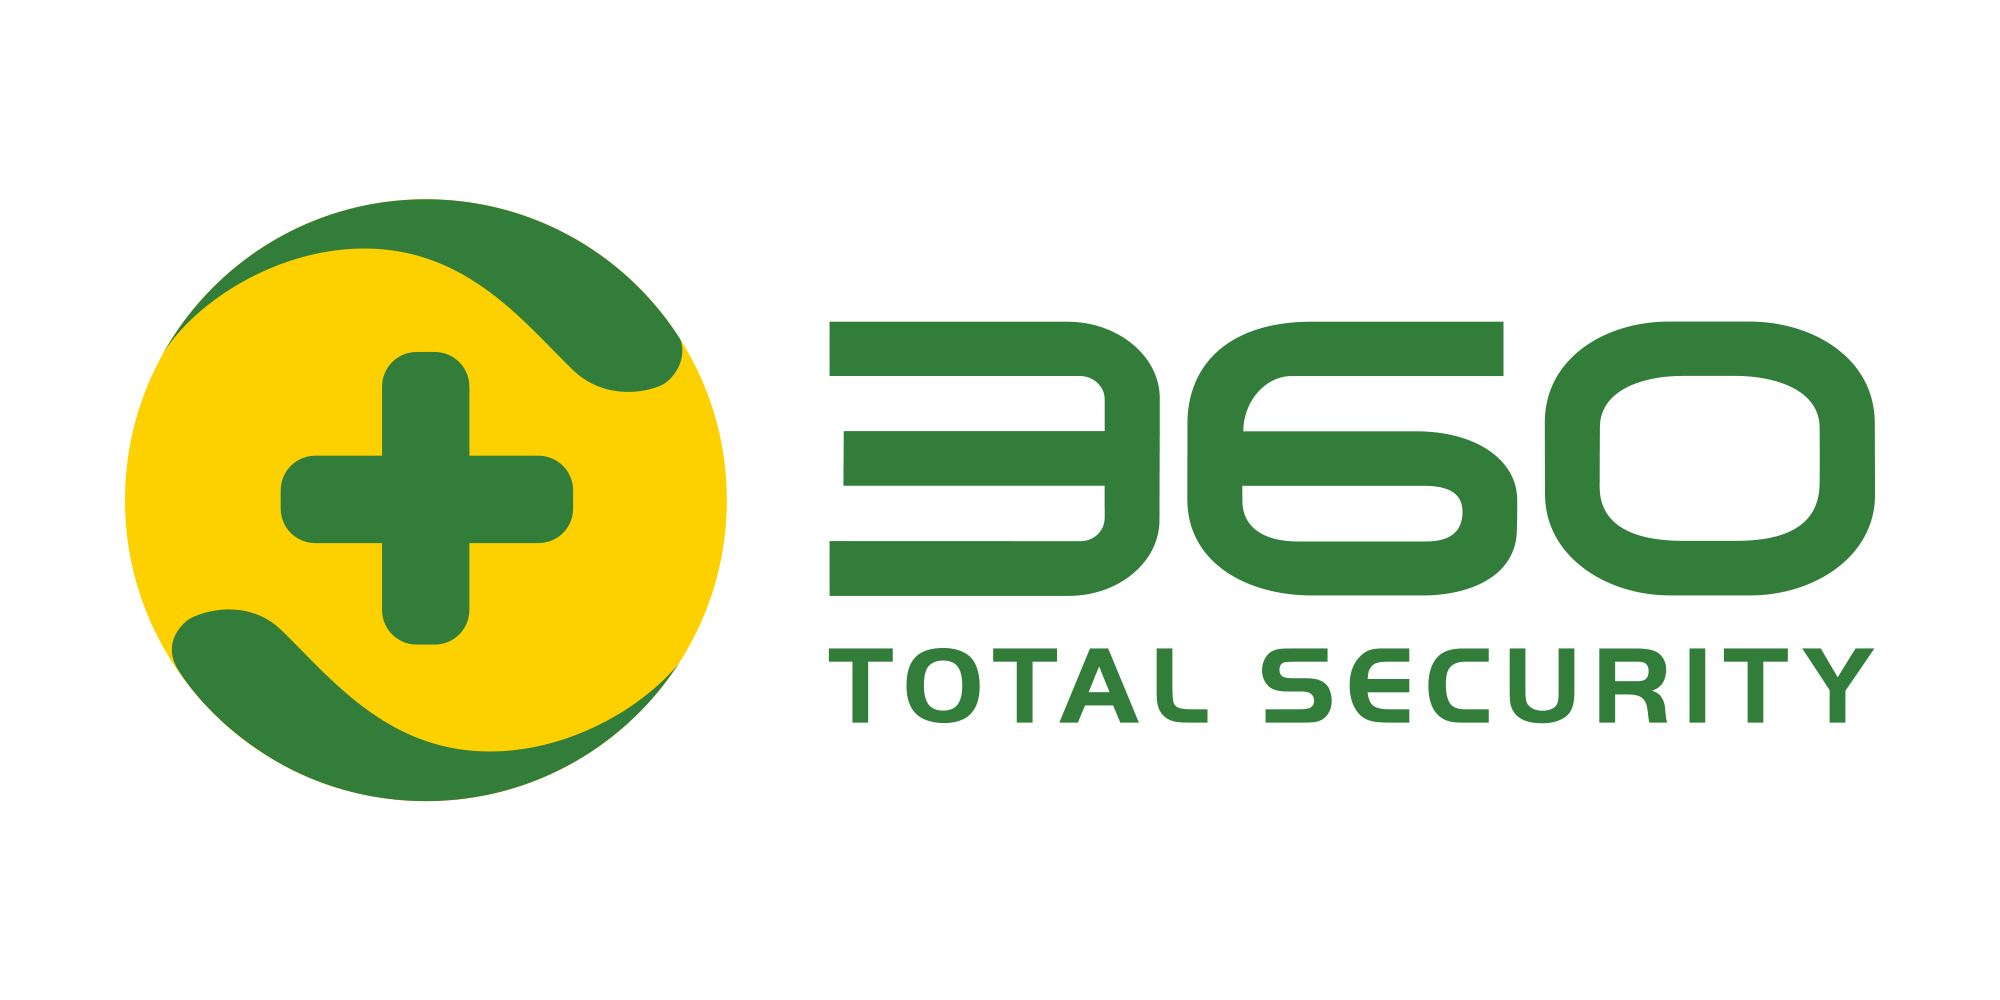 Logo 360 Total Security